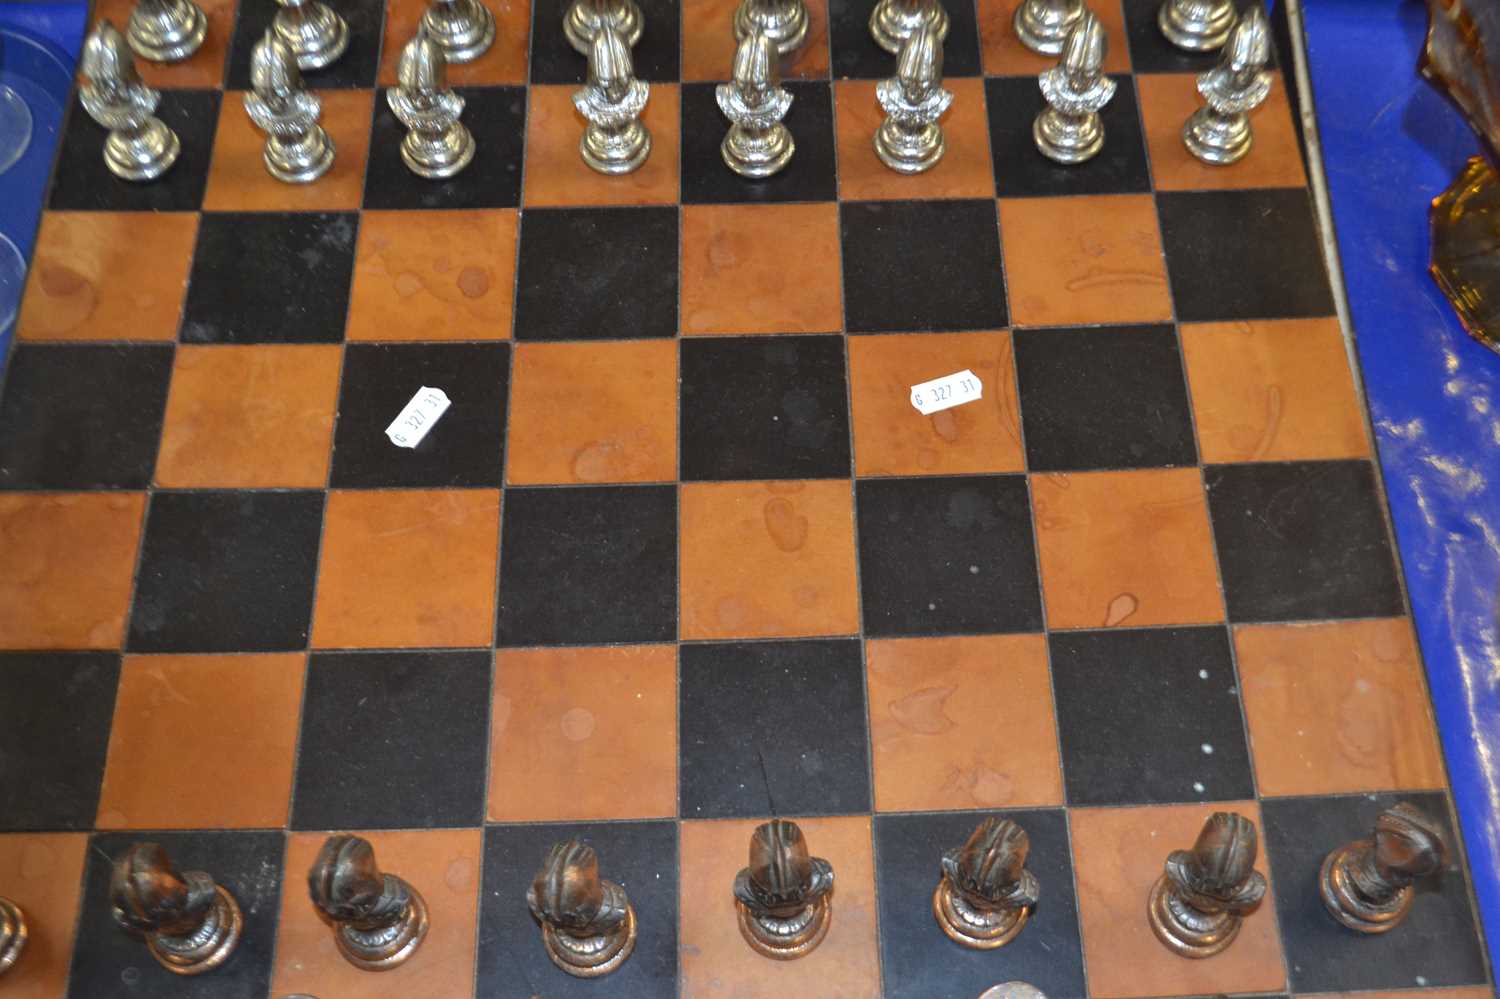 Modern metal chess set and accompanying board